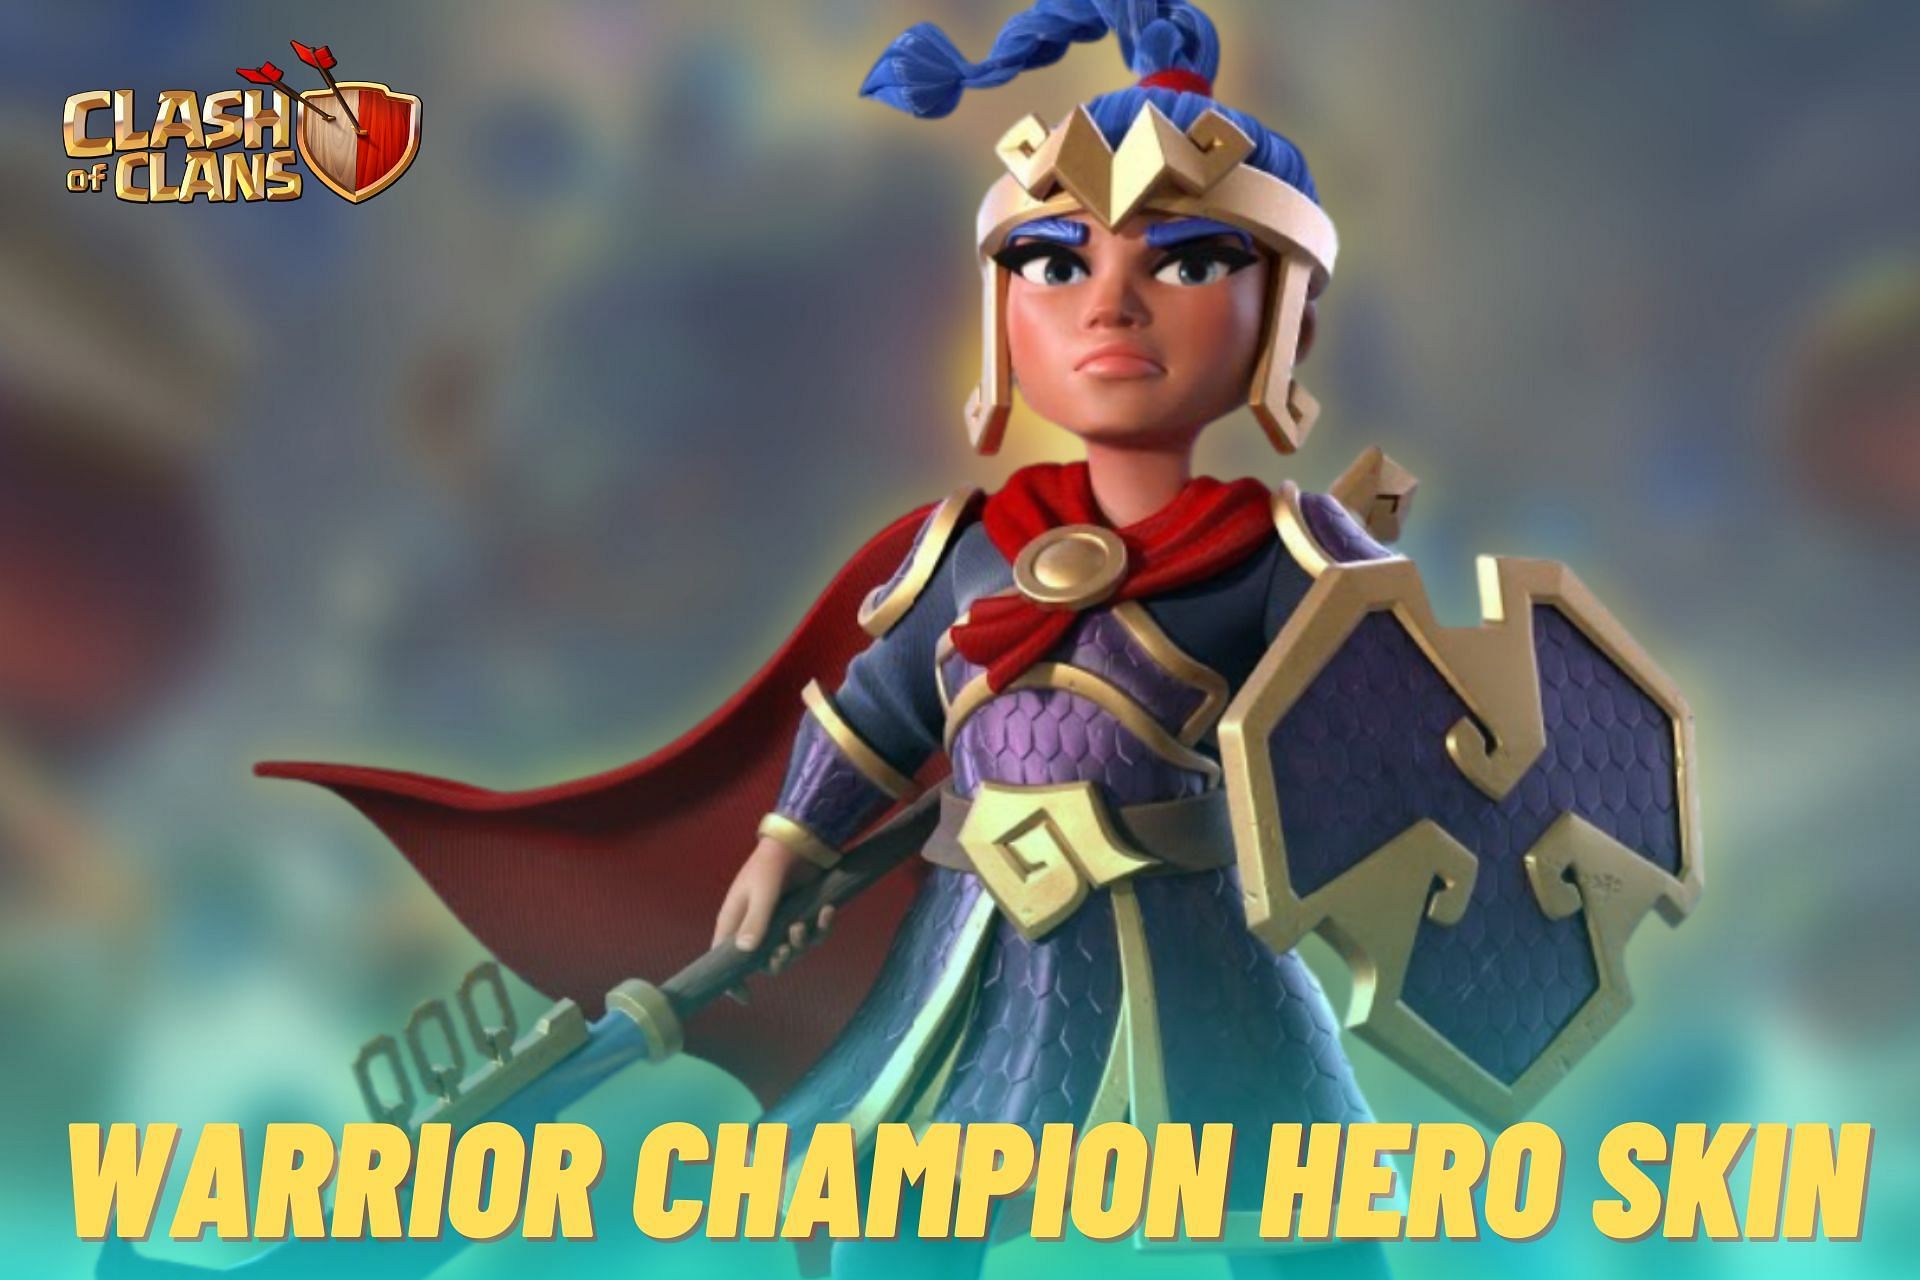 Warrior Champion hero skin in Clash of Clans (Image via Sportskeeda)